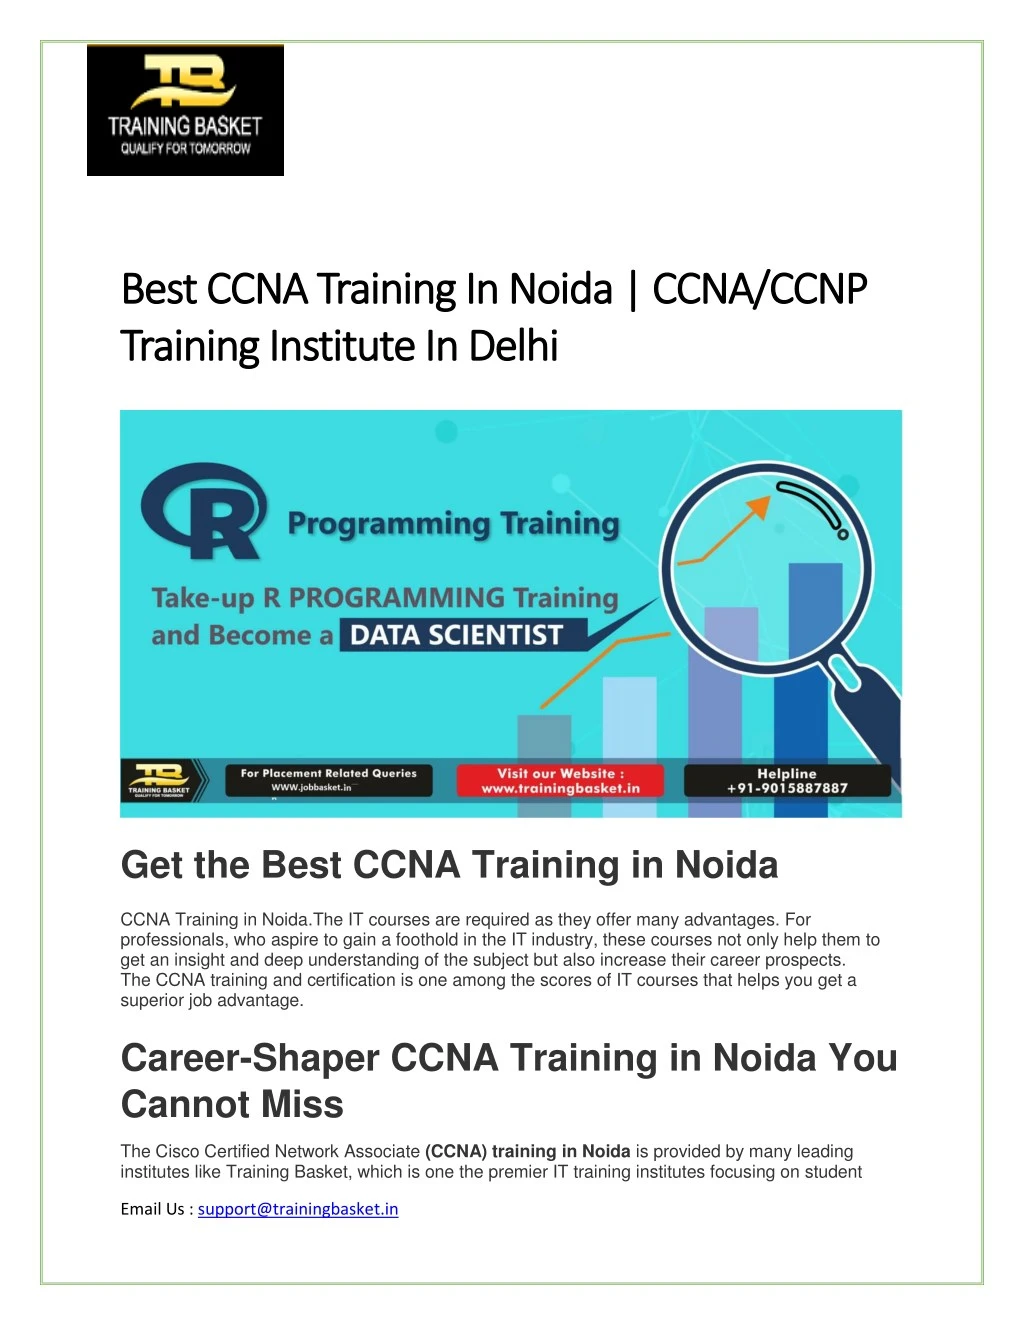 best ccna training in noida ccna ccnp best ccna